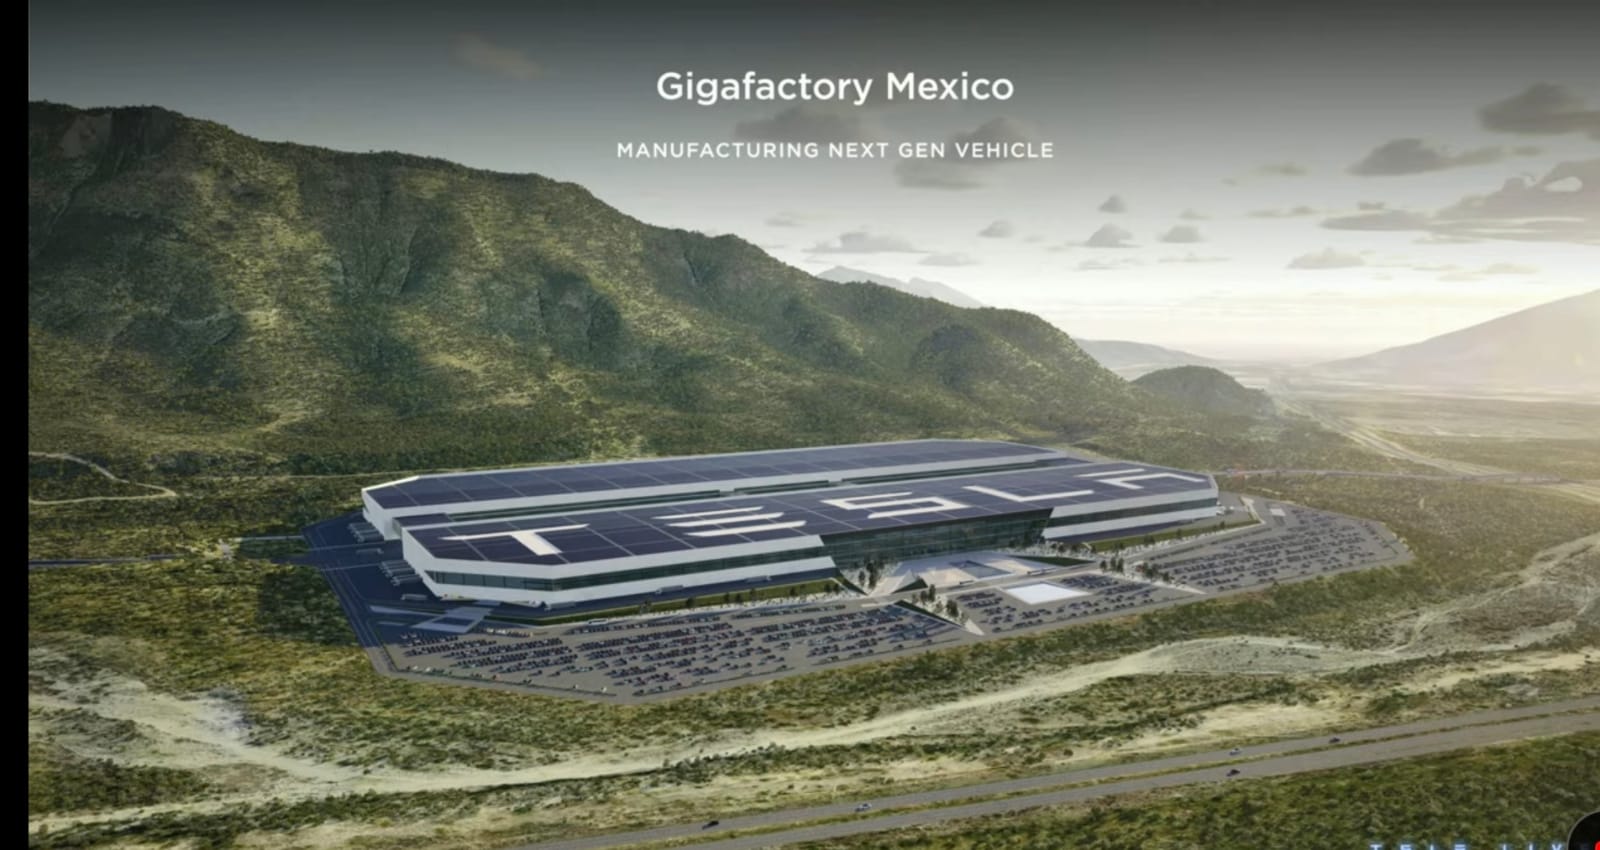 VIDEO: Emocionado, anuncia Musk giga fábrica de Tesla en México